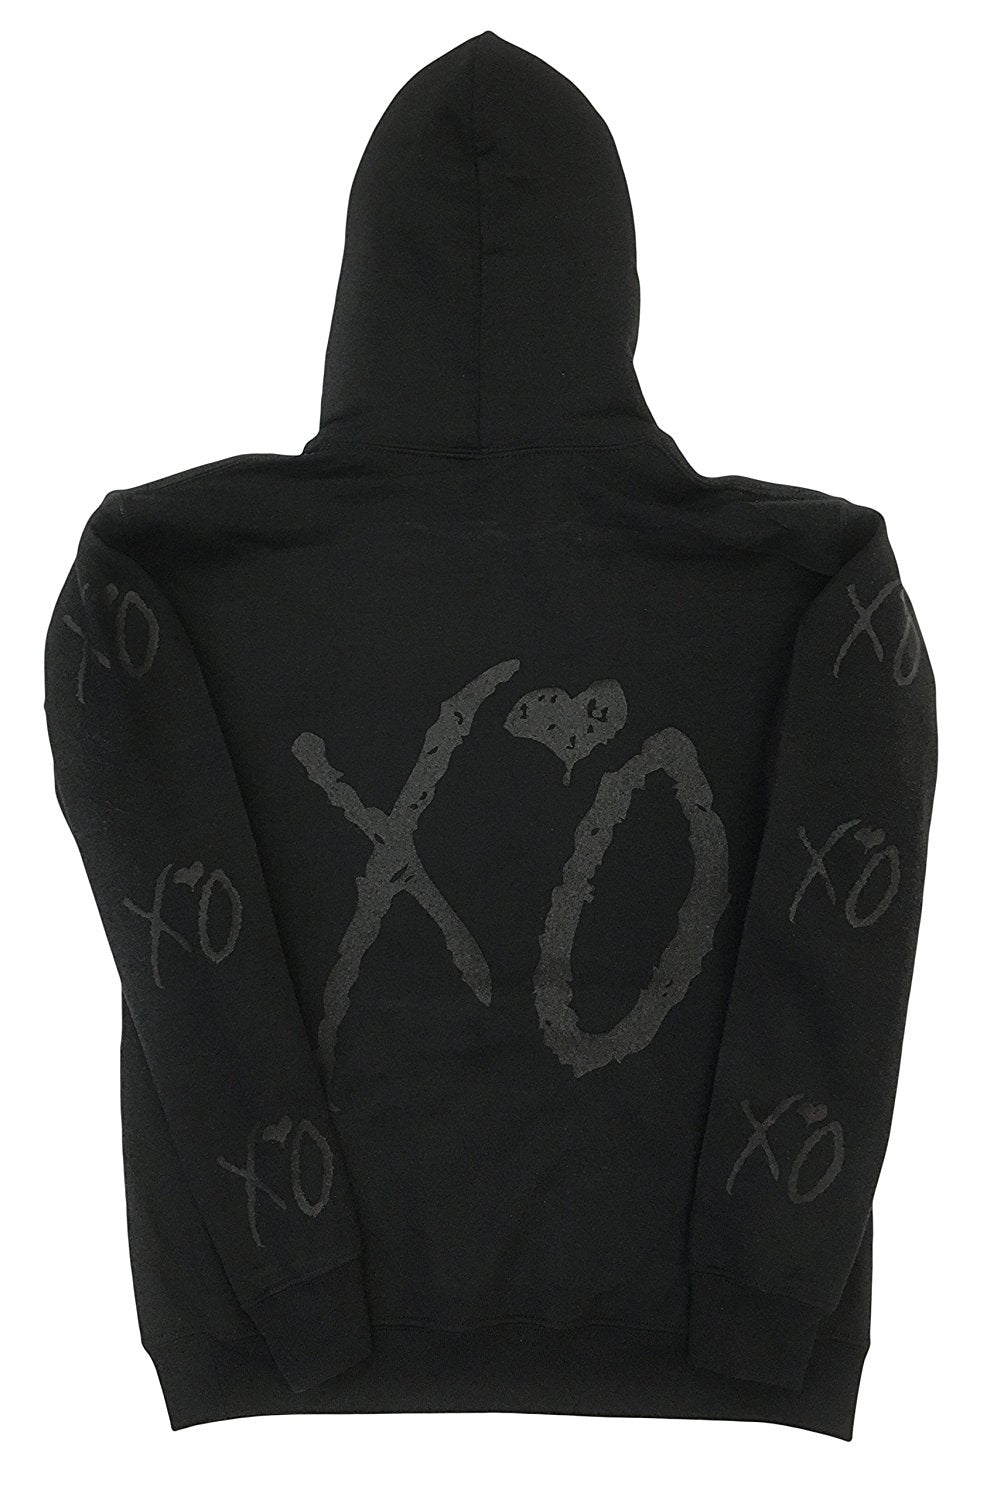 The Weeknd Cross Hoodie, XO The Weeknd Merch, Tour Clothing (Infrared -  Custom City